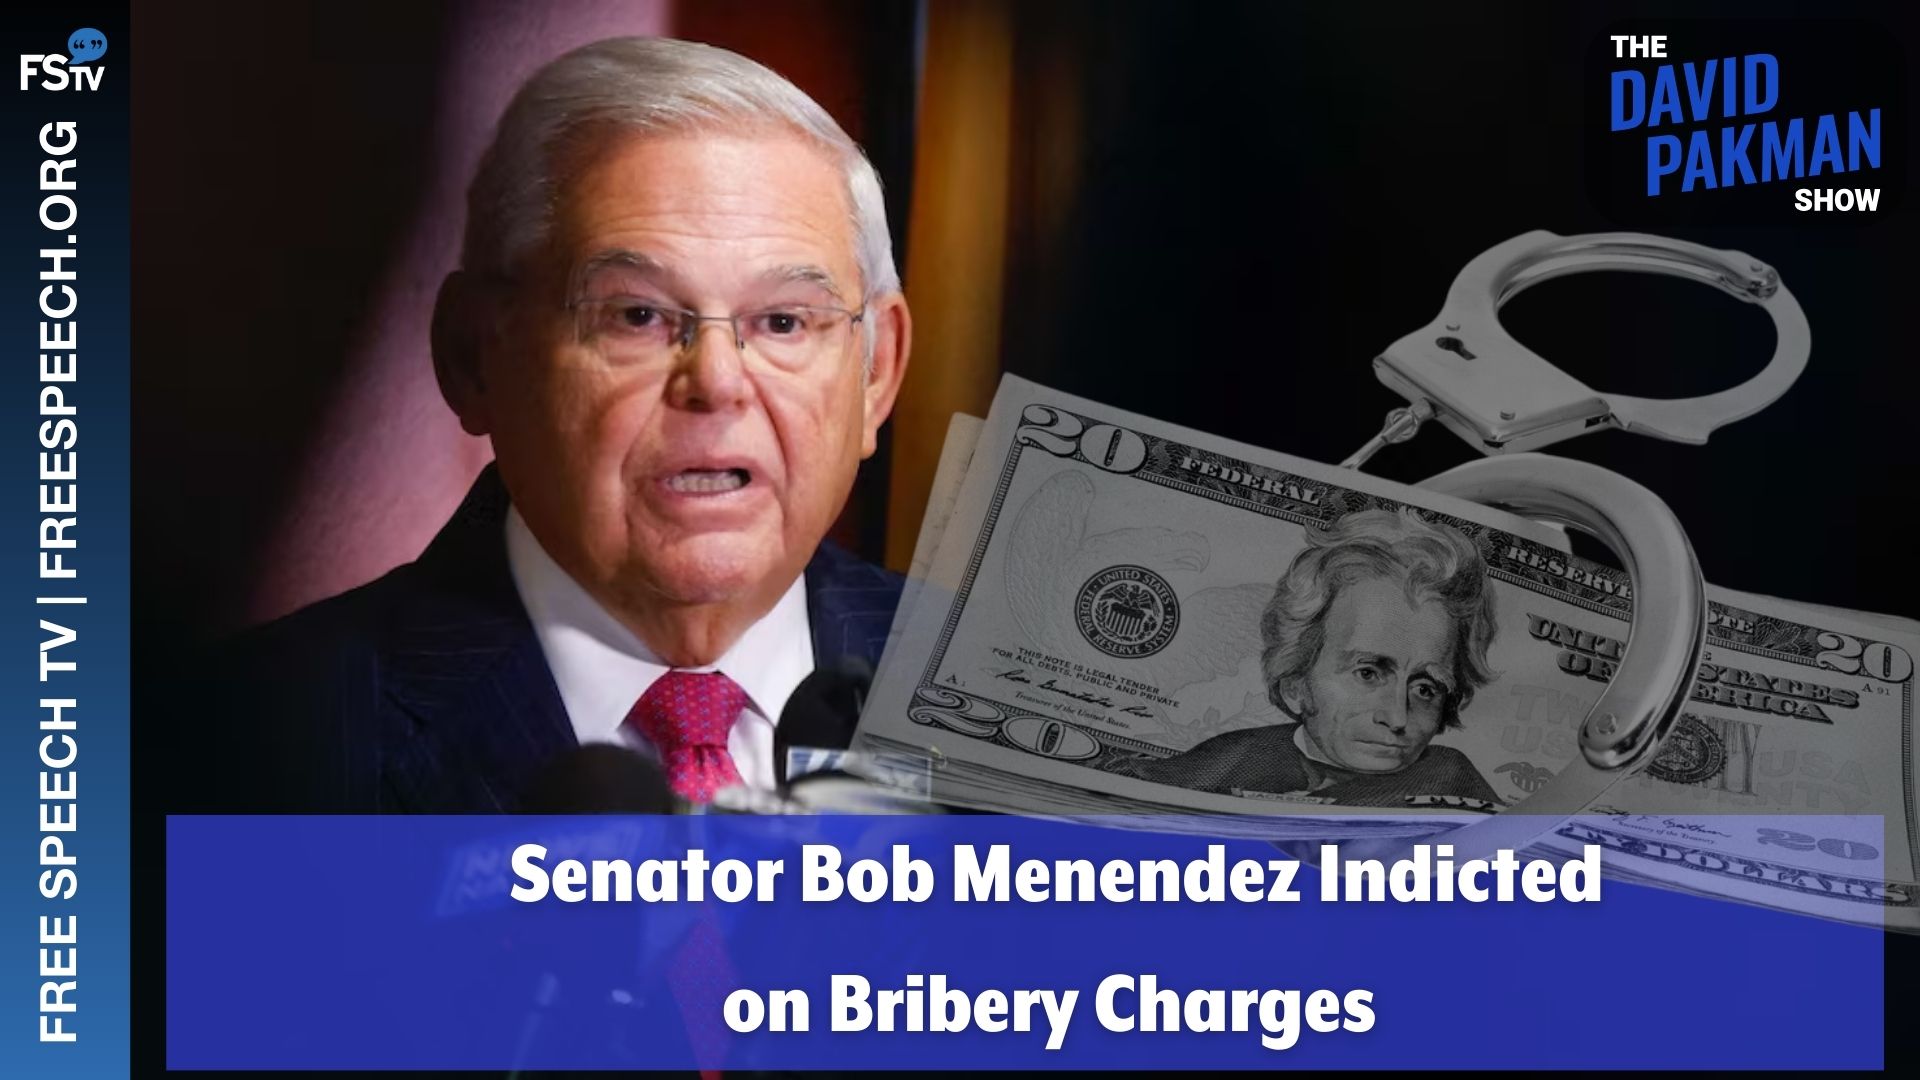 The David Pakman Show | Senator Bob Menendez Indicted on Bribery Charges